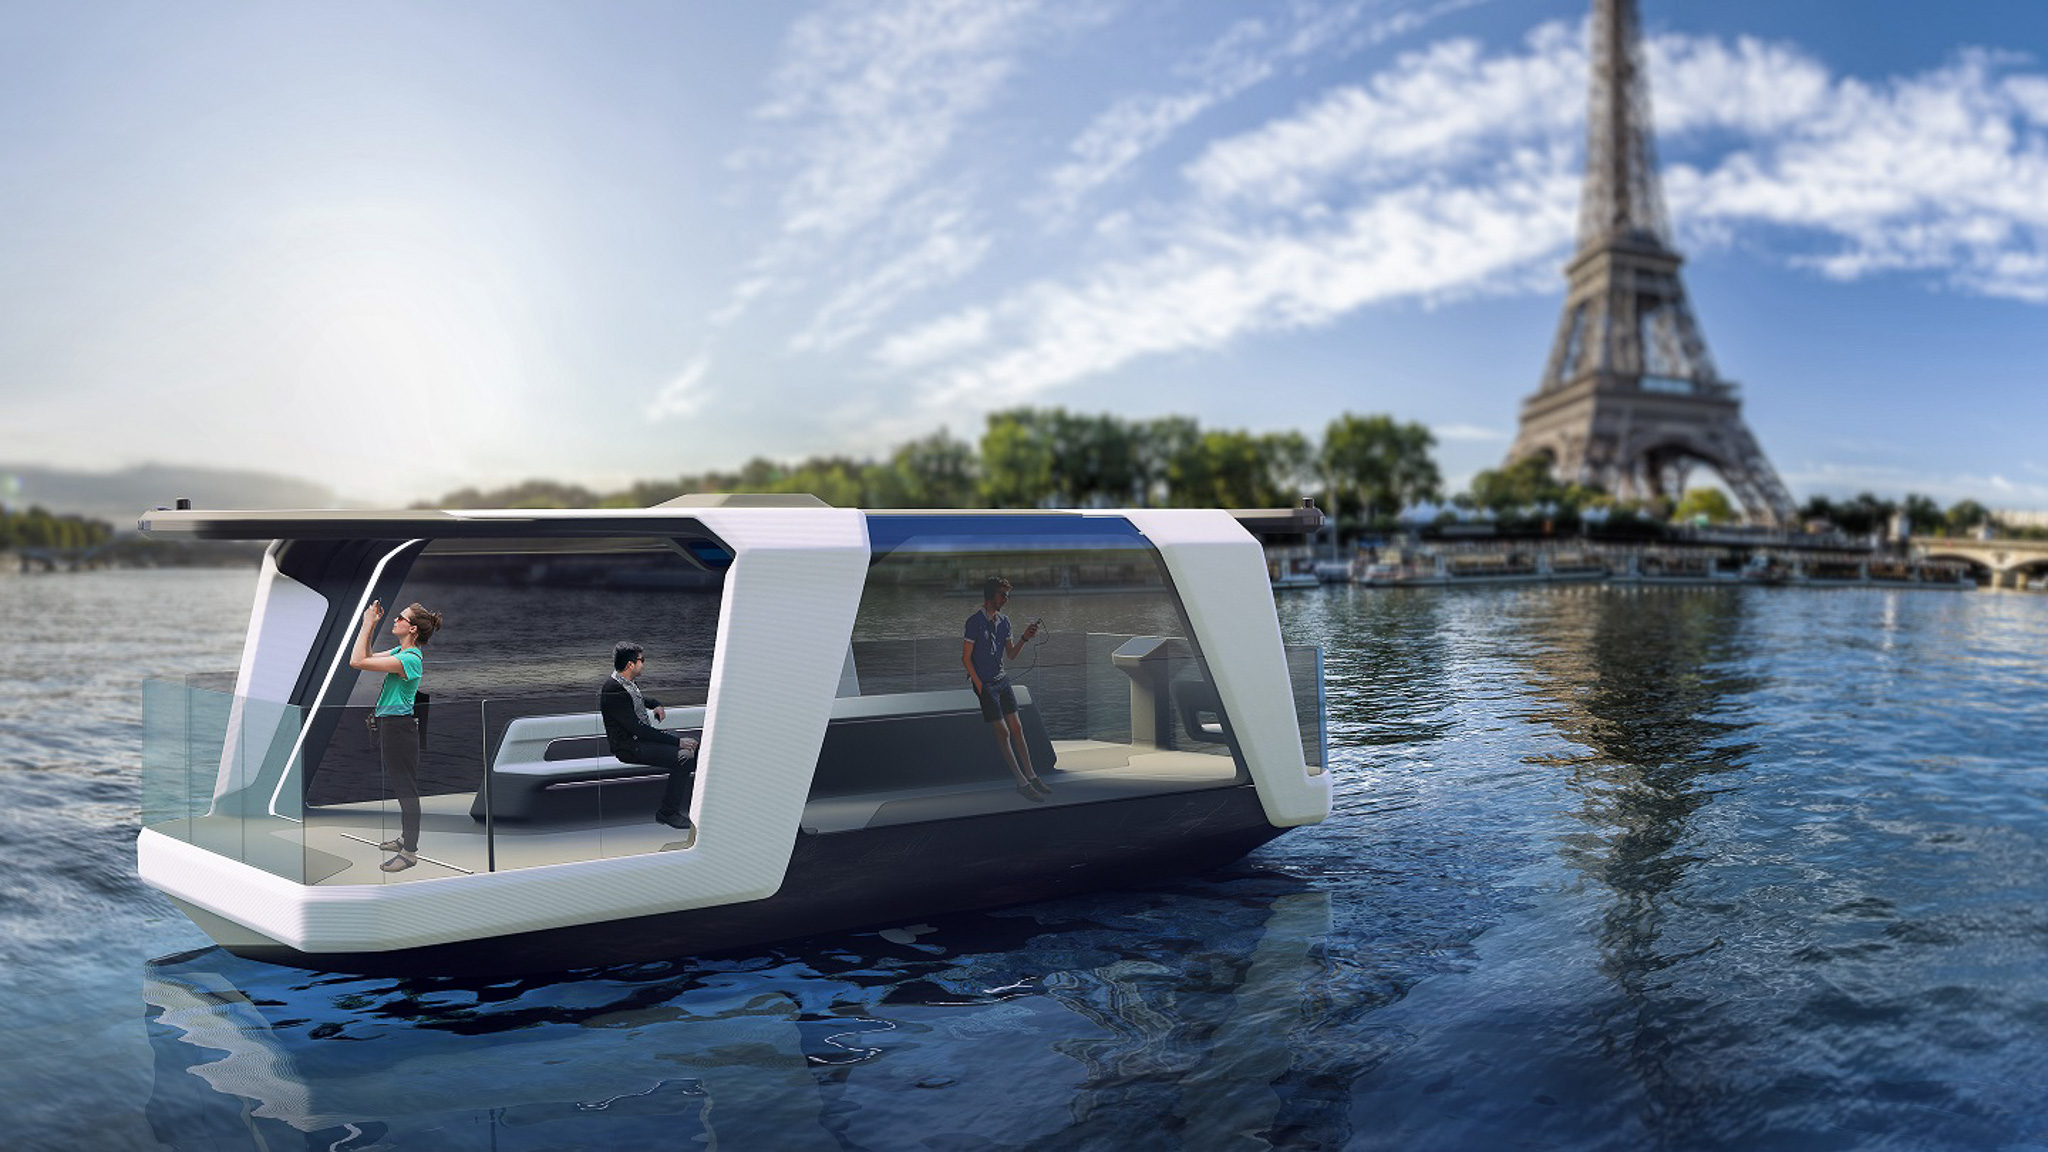 electrical-and-autonomous-ferry-paris-olympic-games-royal-van-der-leun-electrical-installation-autonome-ferry-vdl-seine-eiffeltower-2